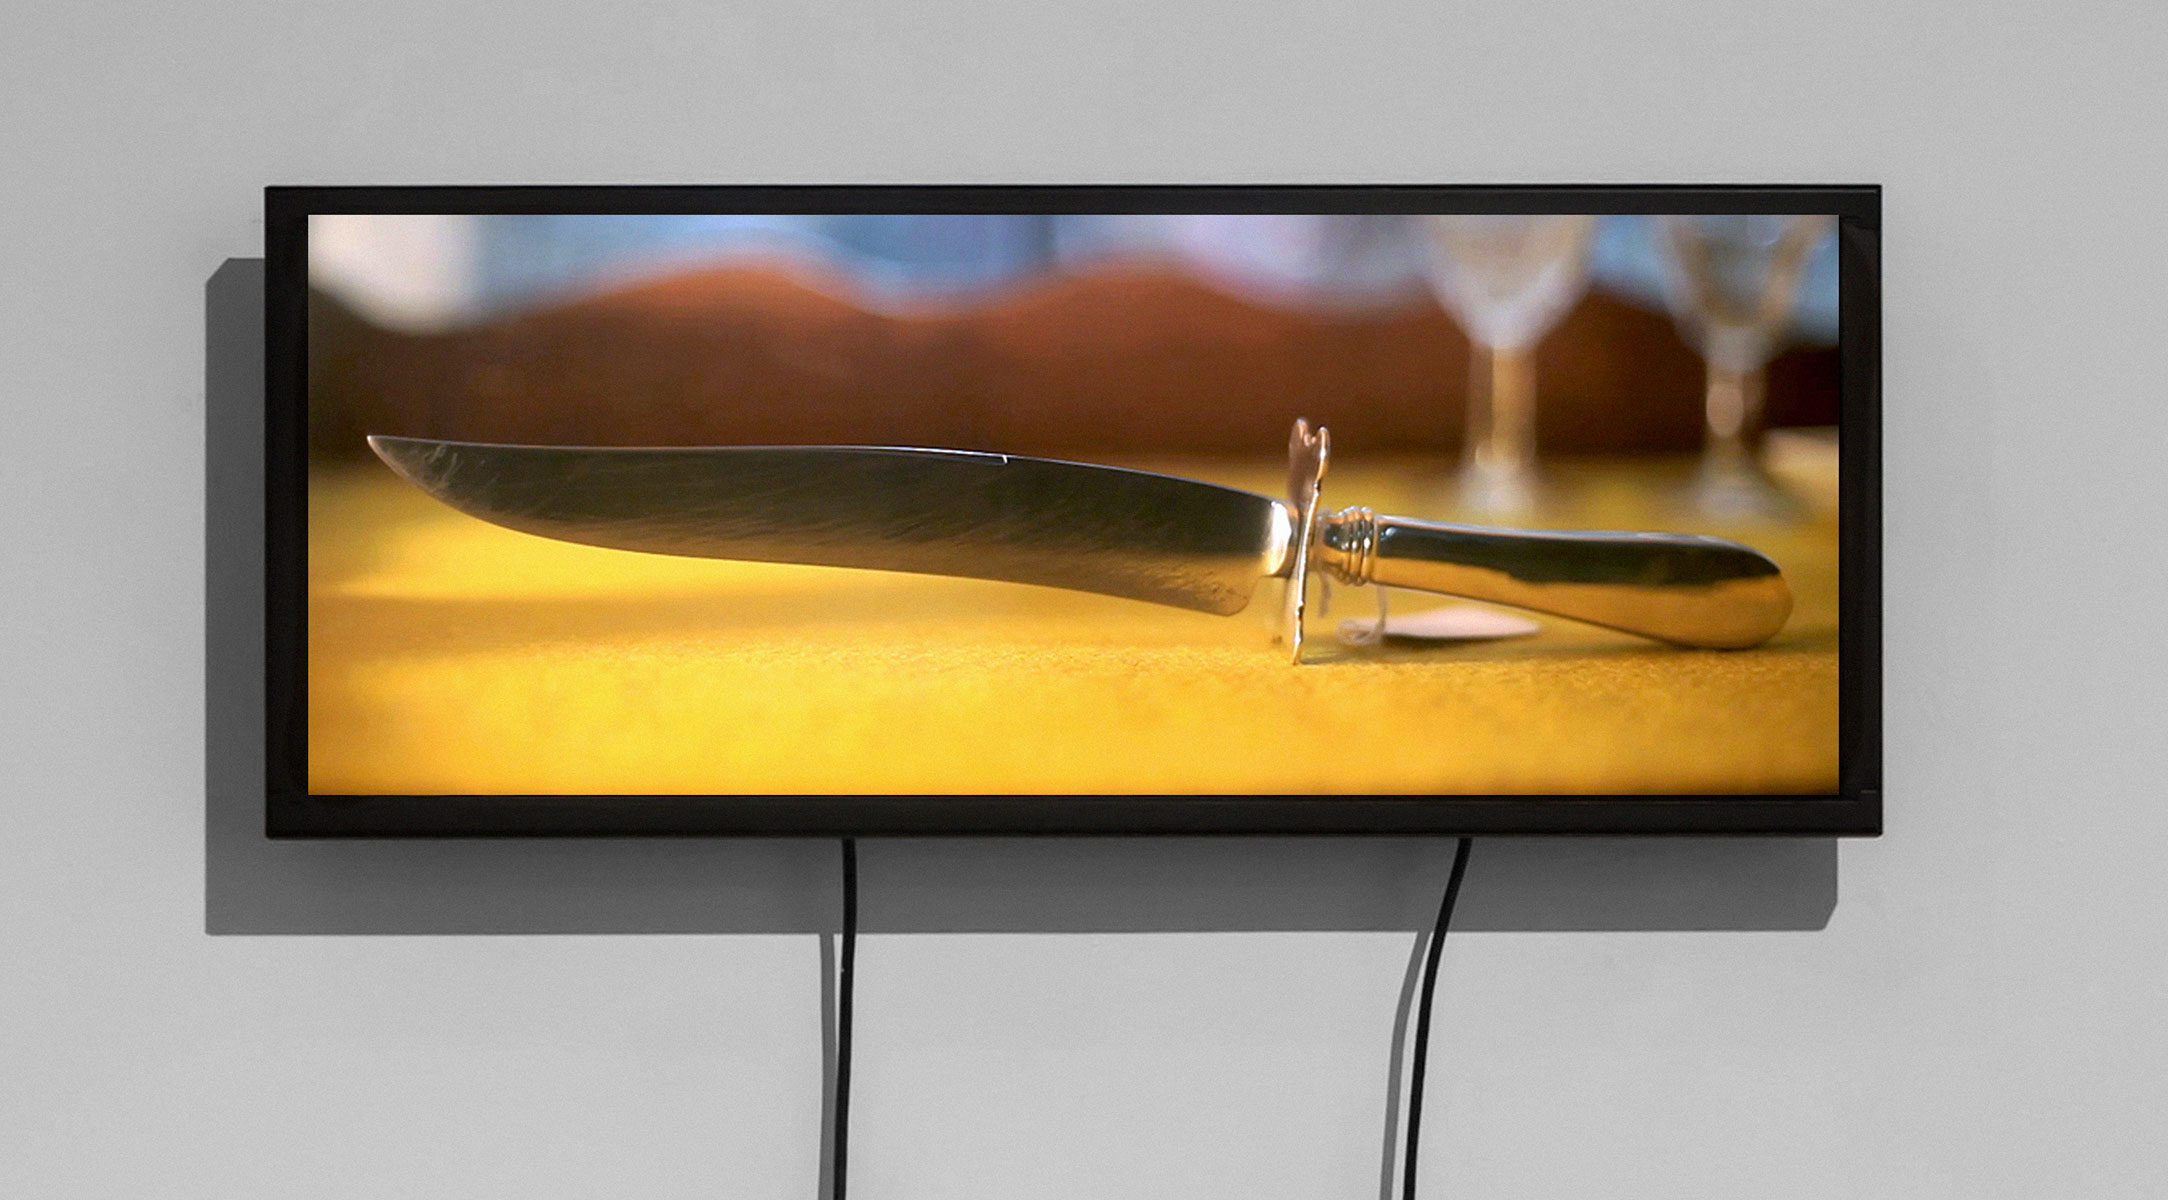 Owen Kydd: Knife (J.G.), 2012. Video on panoramic display.